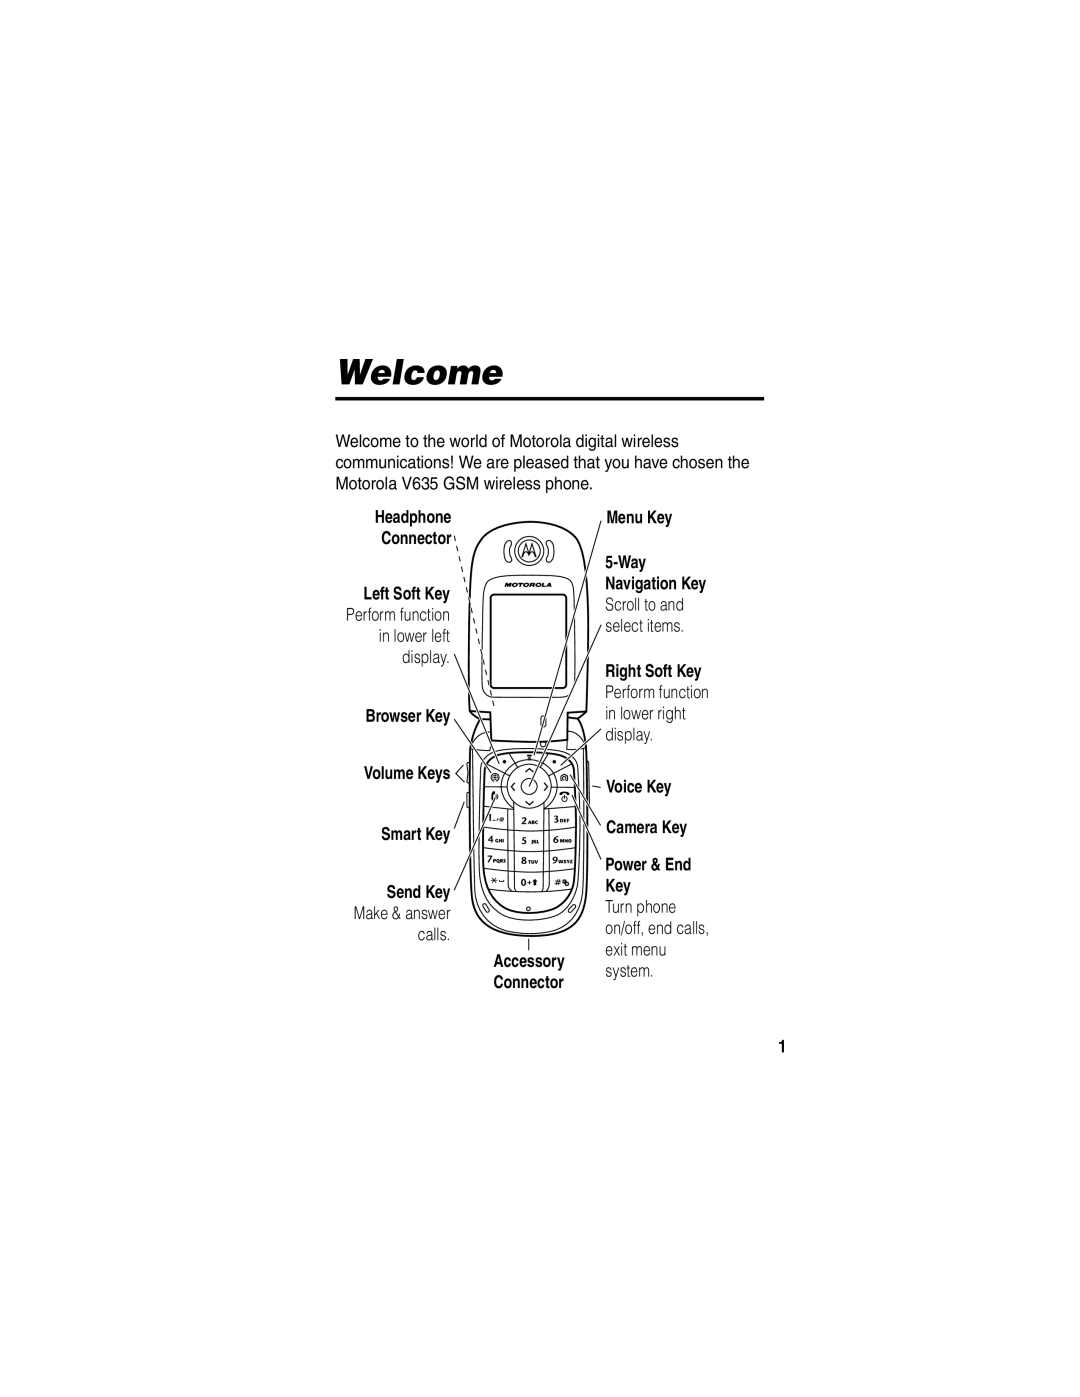 Motorola V635 manual Welcome, Headphone Connector, Browser Key Volume Keys Smart Key Send Key Make & answer calls, Menu Key 